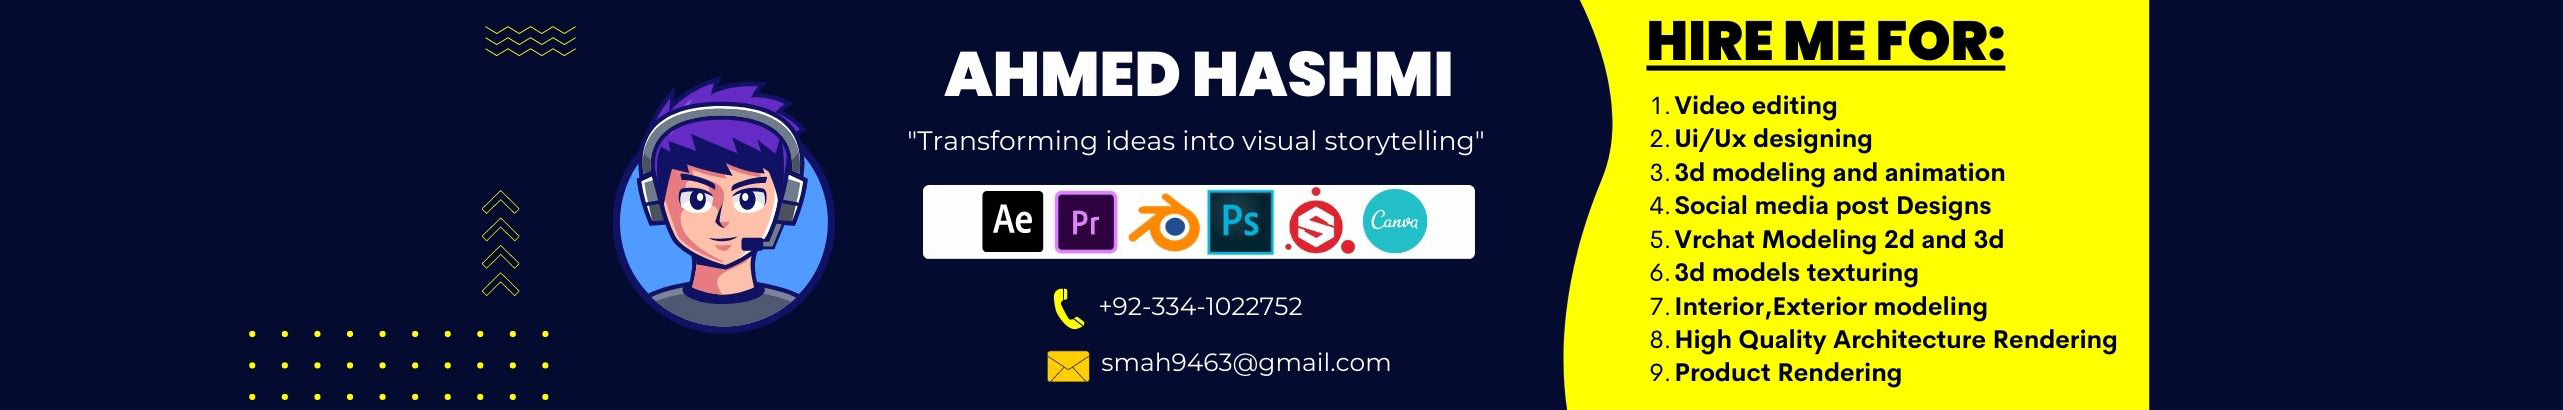 Ahmed Hashmi's profile banner